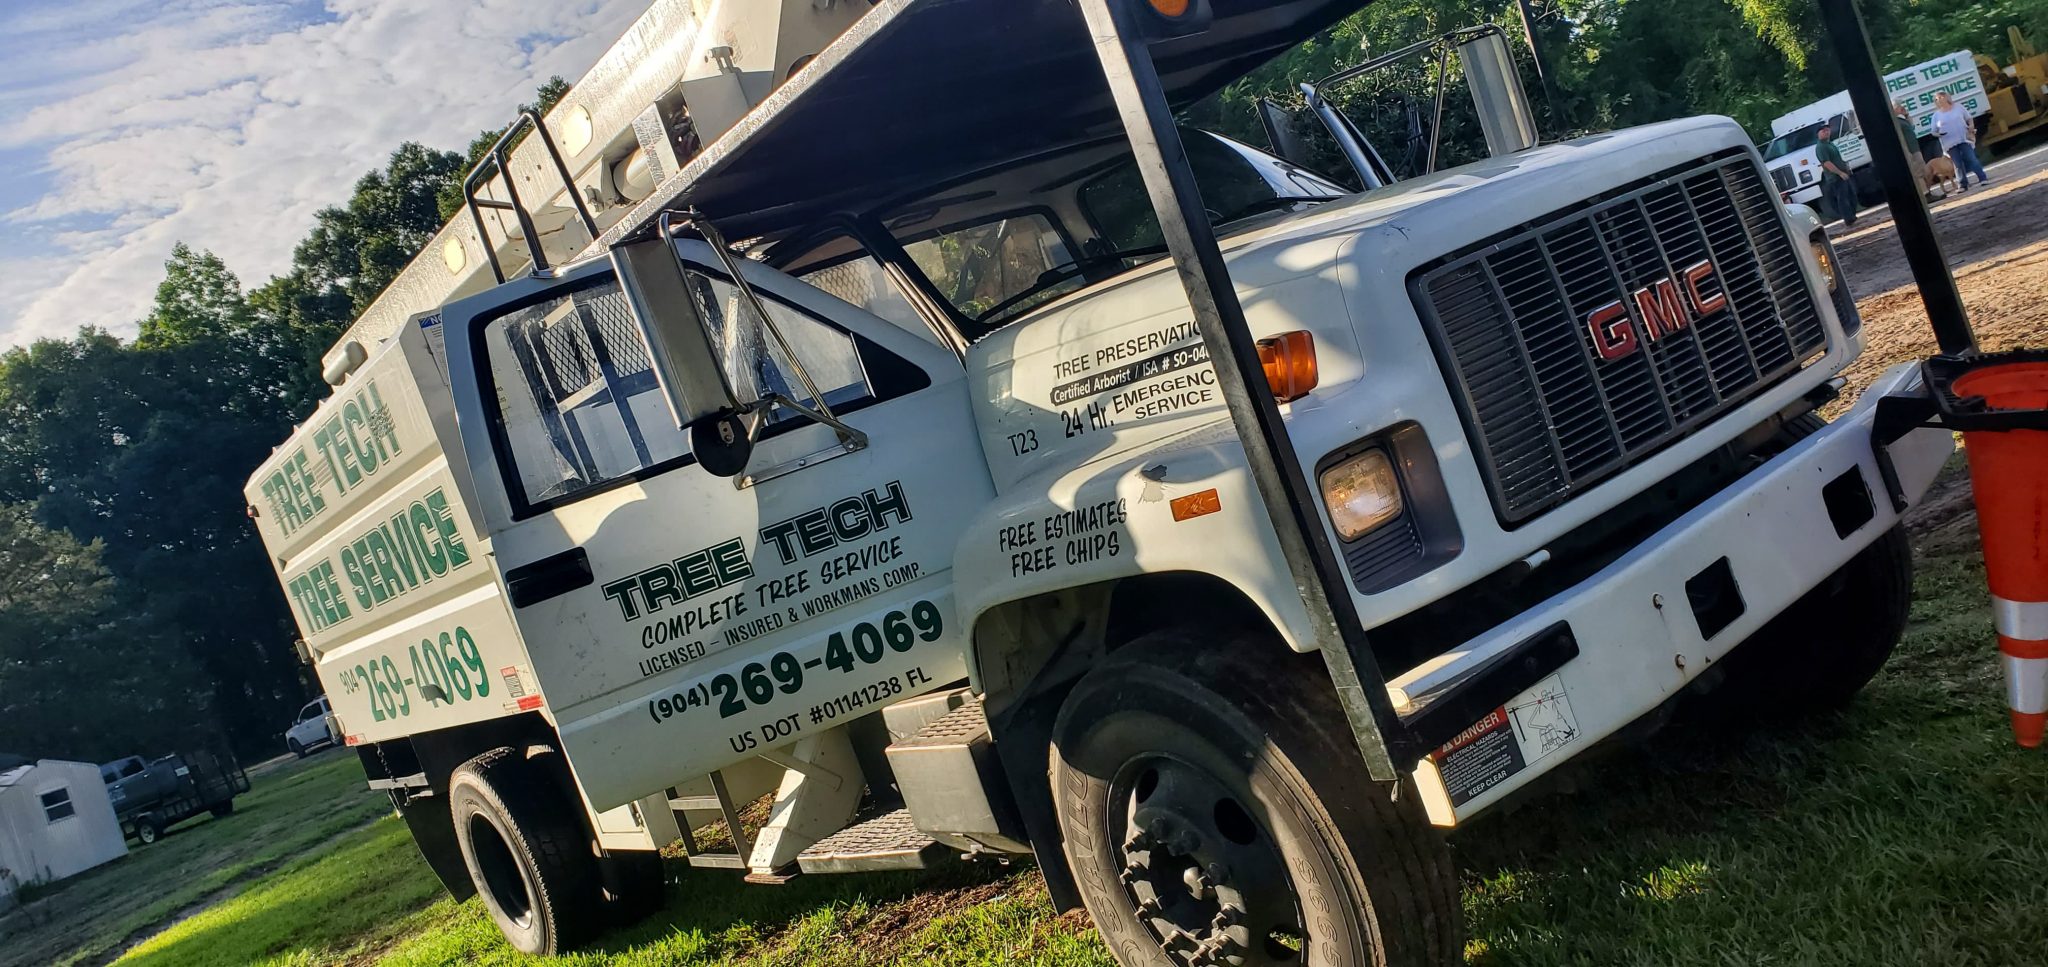 Tree Tech Tree Service, Inc. truck.